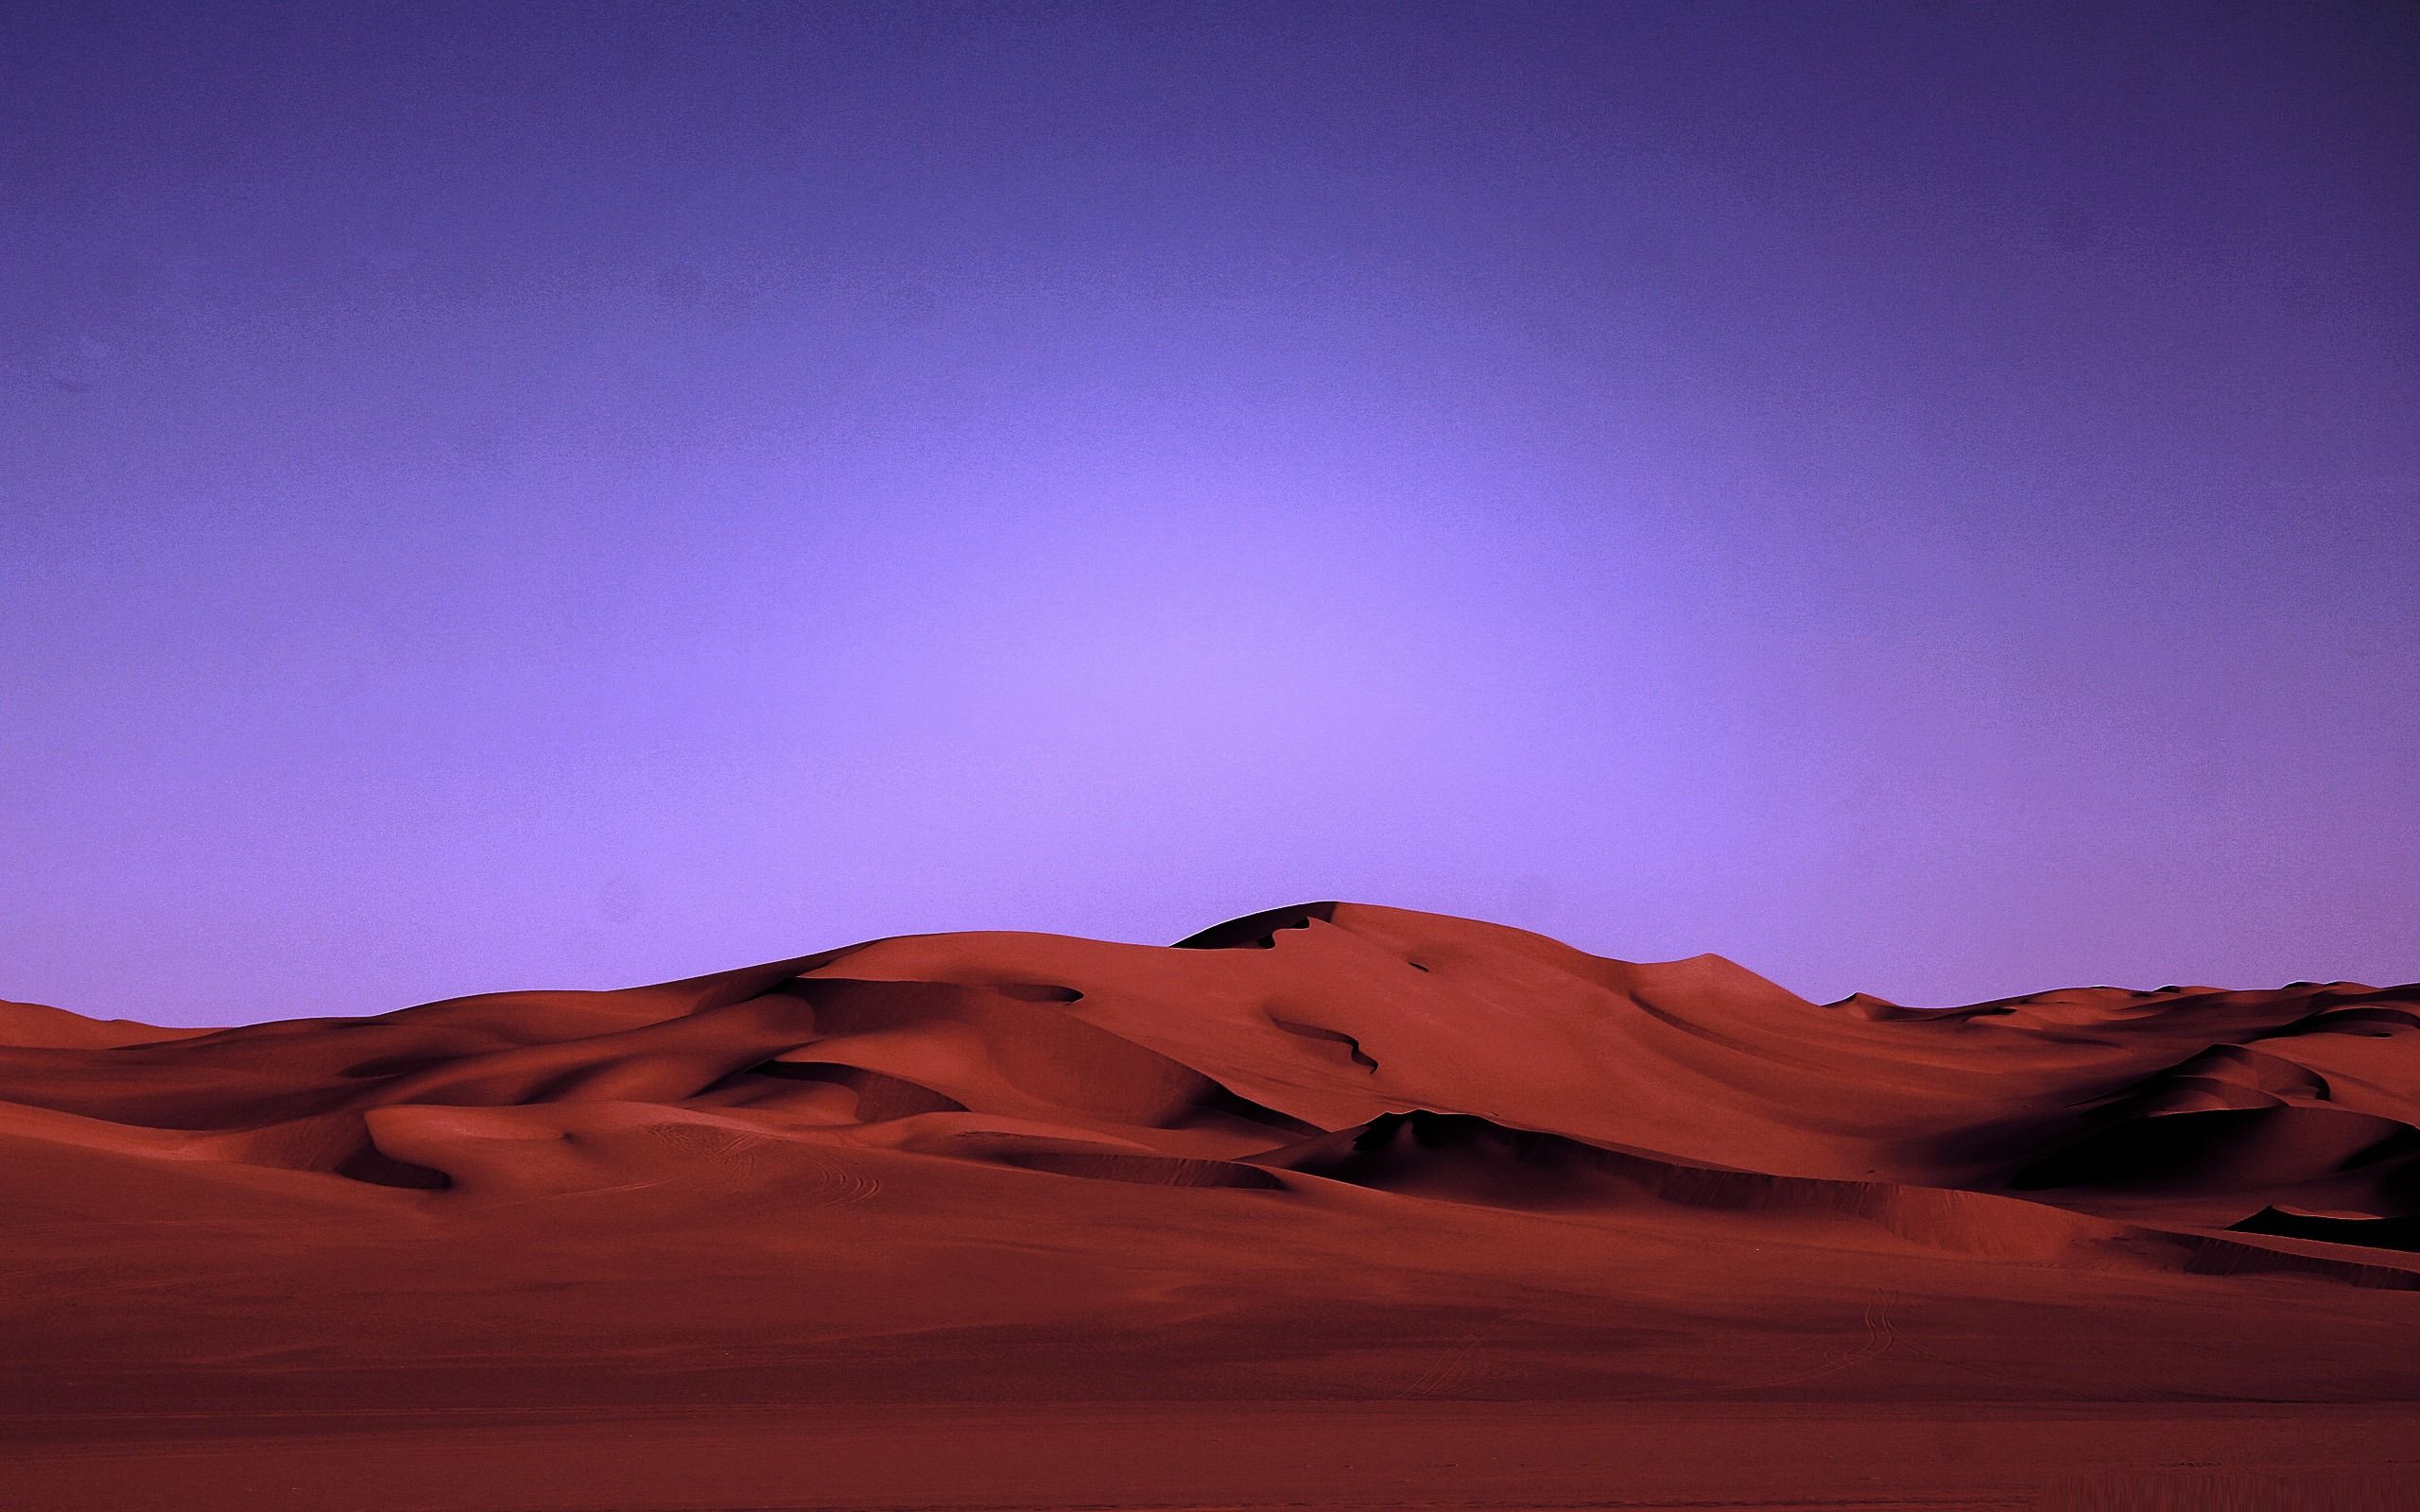 Red sand dunes under a purple sky - Desert